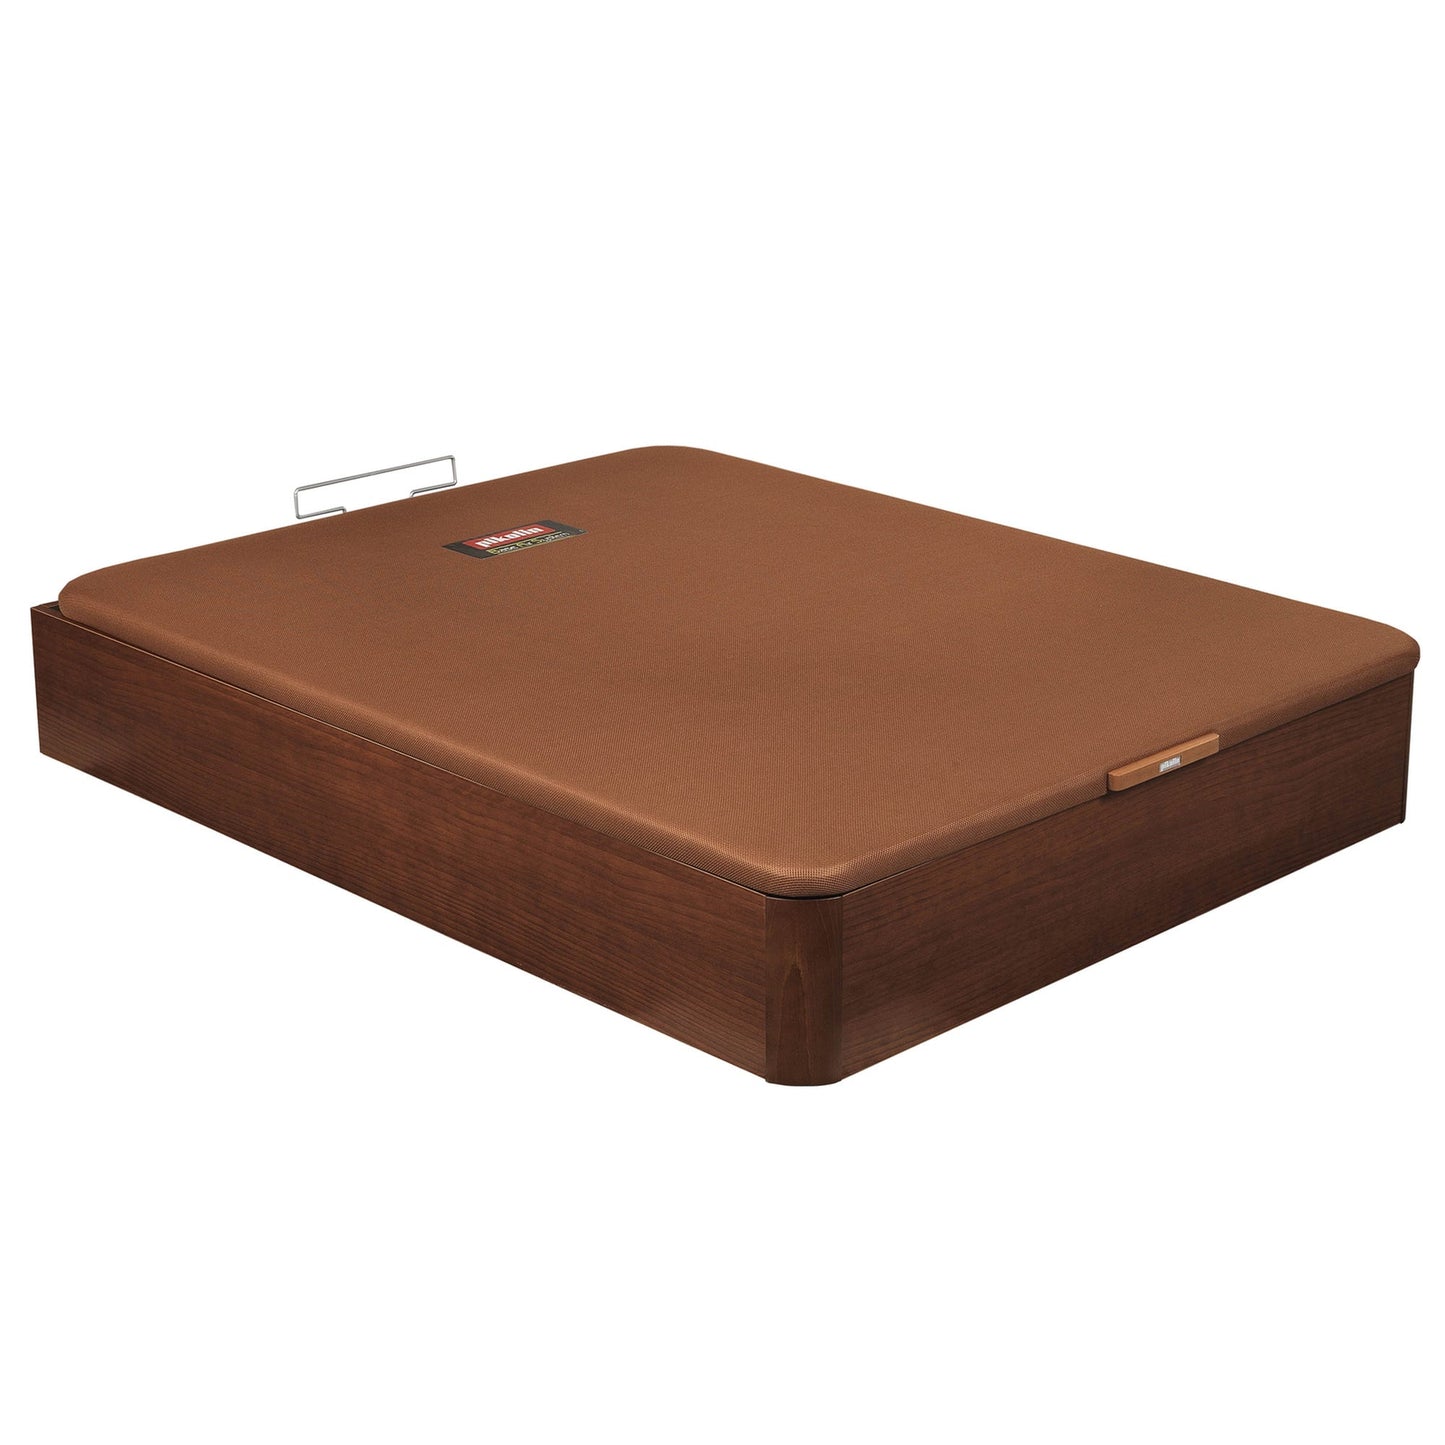 Canapé abatible de madera de color cerezo - NATURBOX CEREZO - 135x200